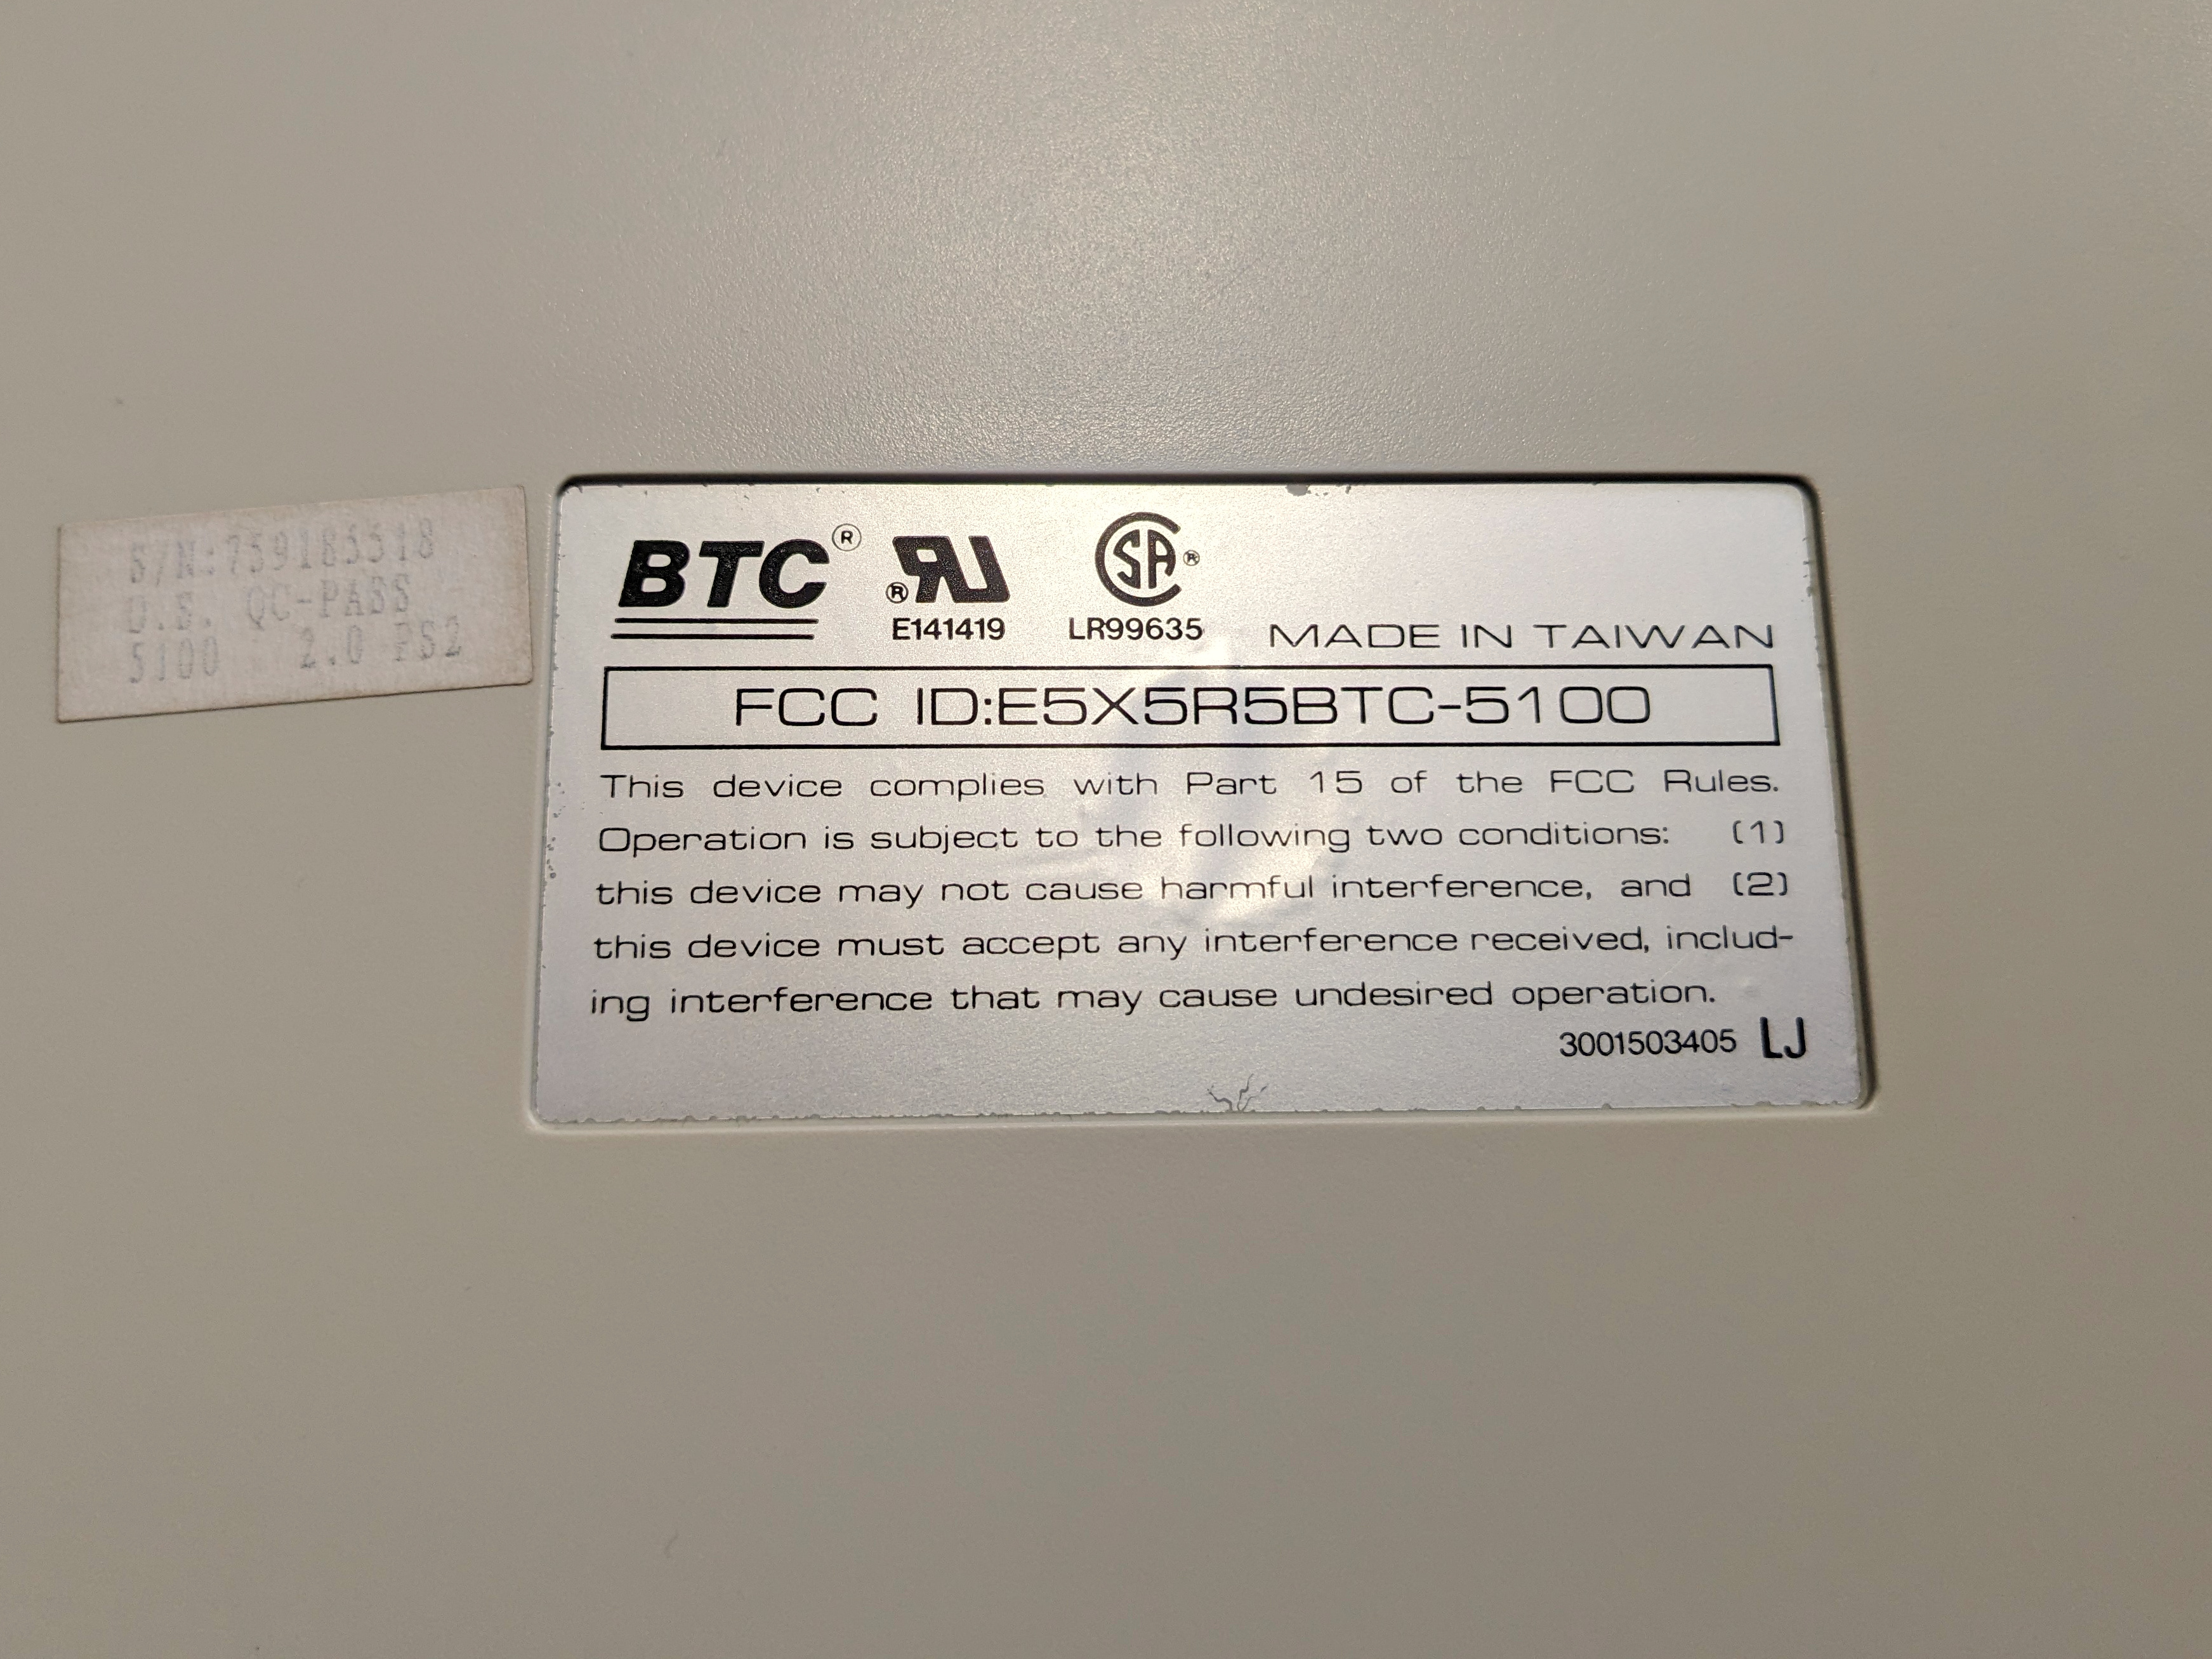 btc-5100_004-label.jpg